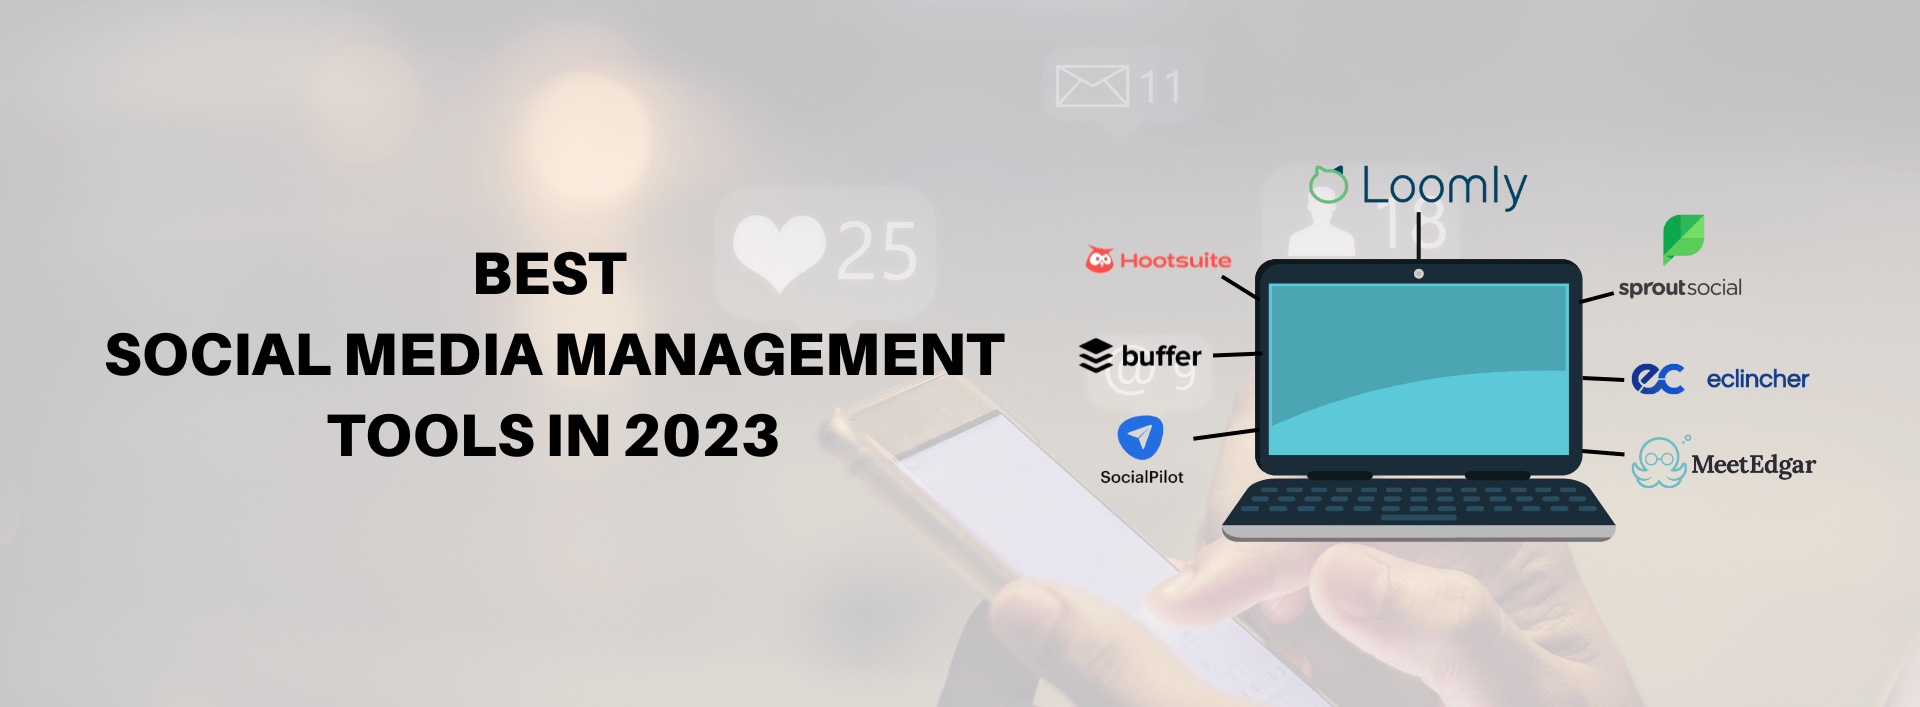 Best Social Media Management Tools in 2023